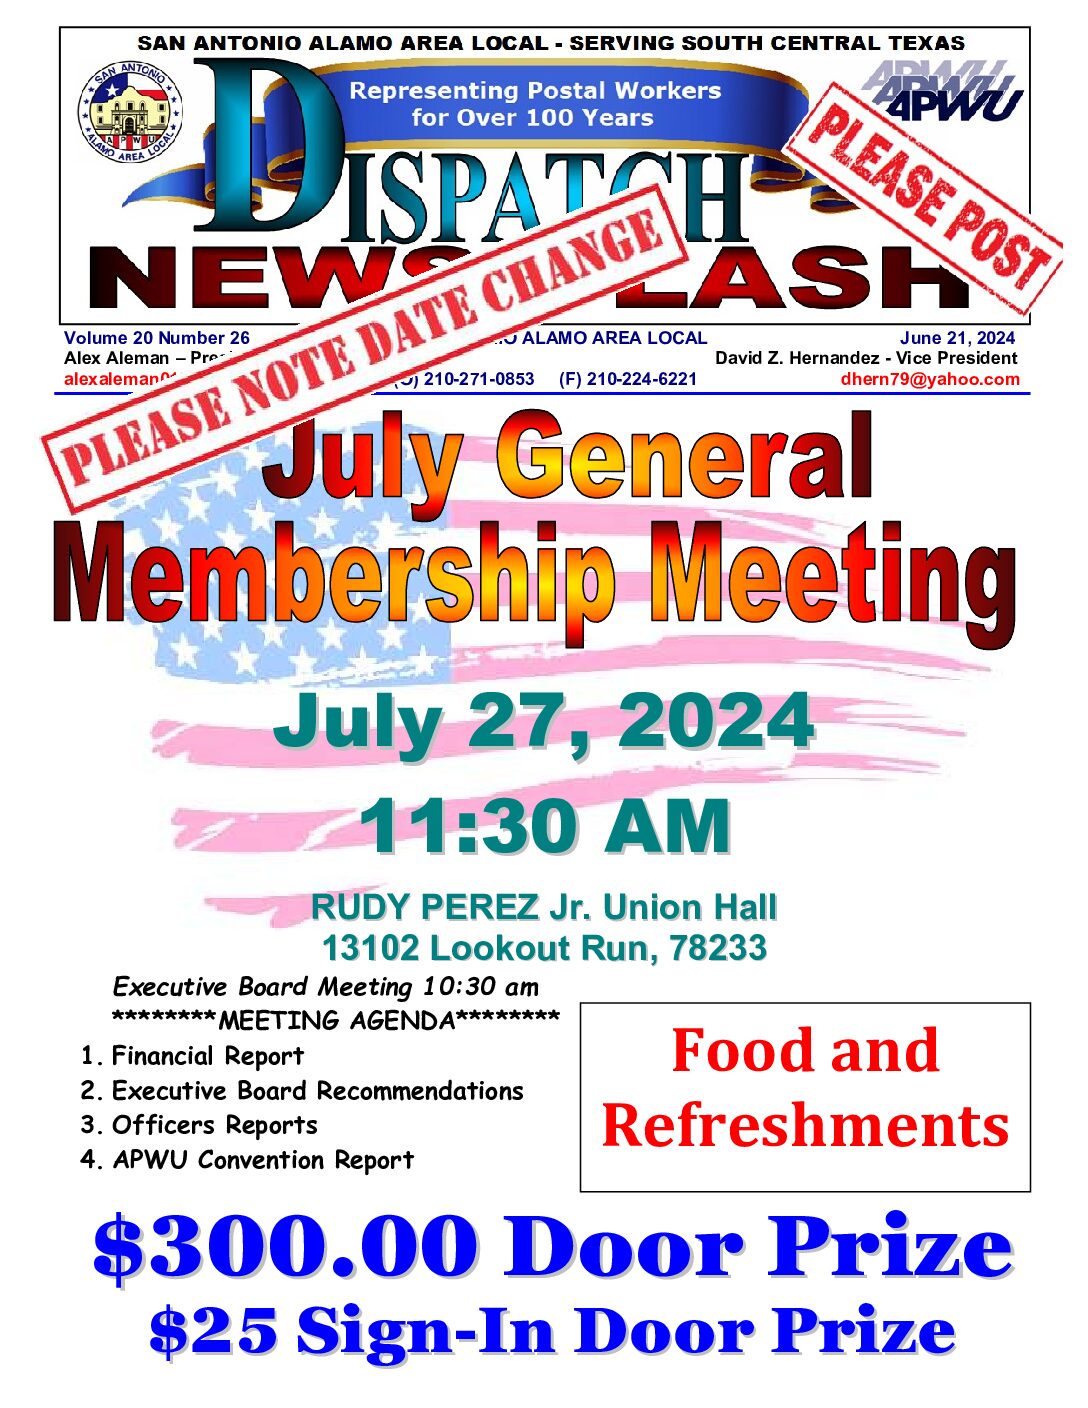 NewsFlash 20-26 July General Membership Meeting - 